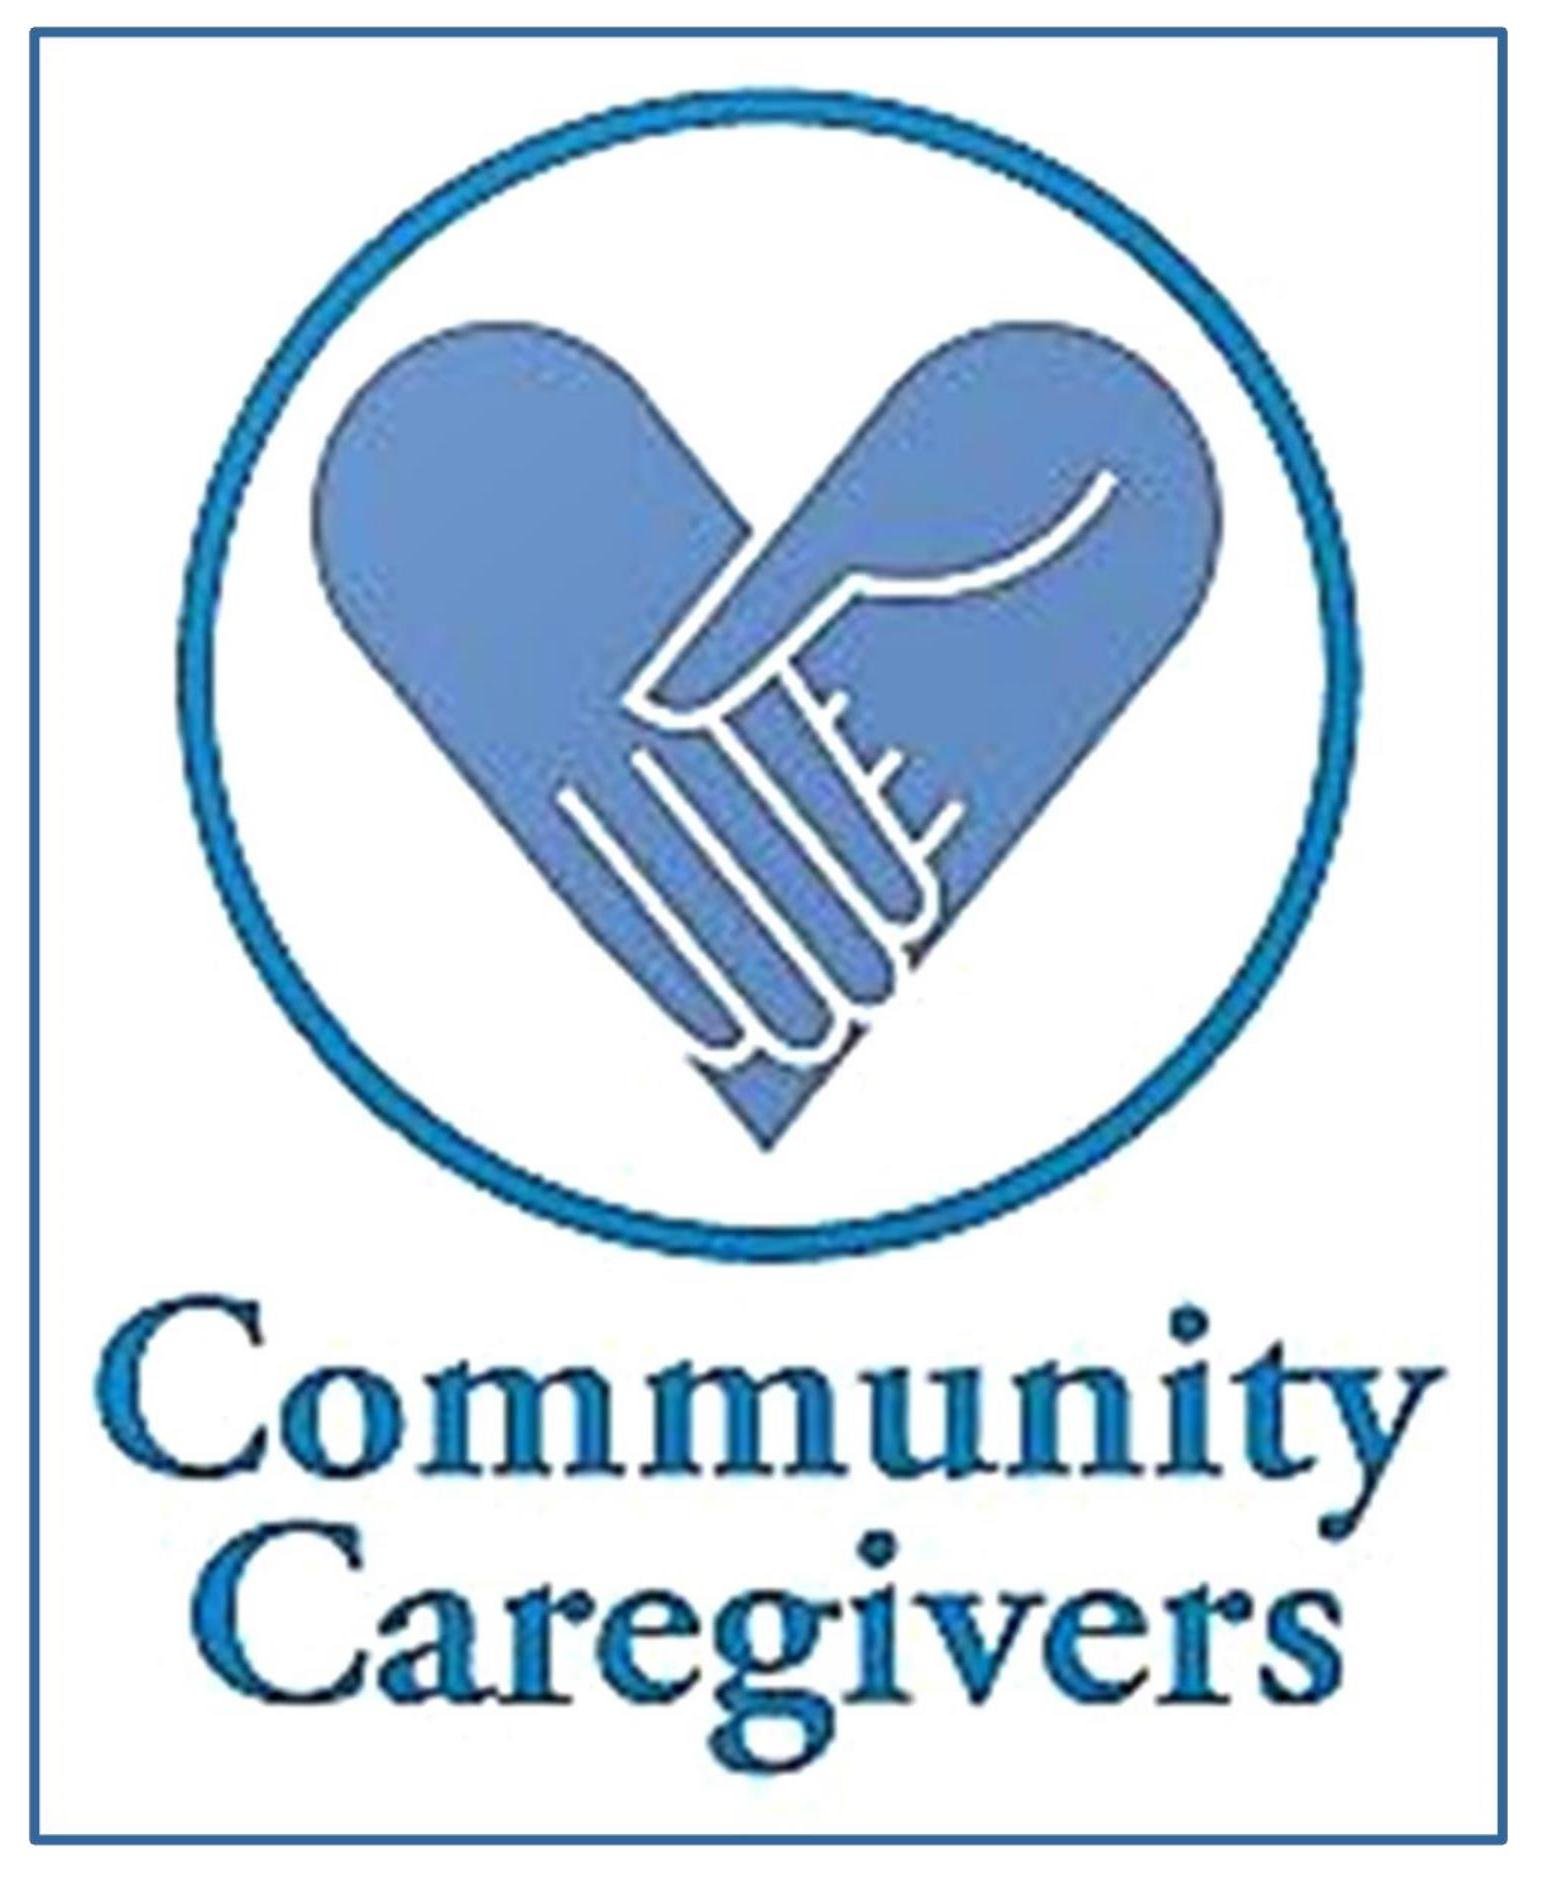 Community Caregivers LOGO.jpg